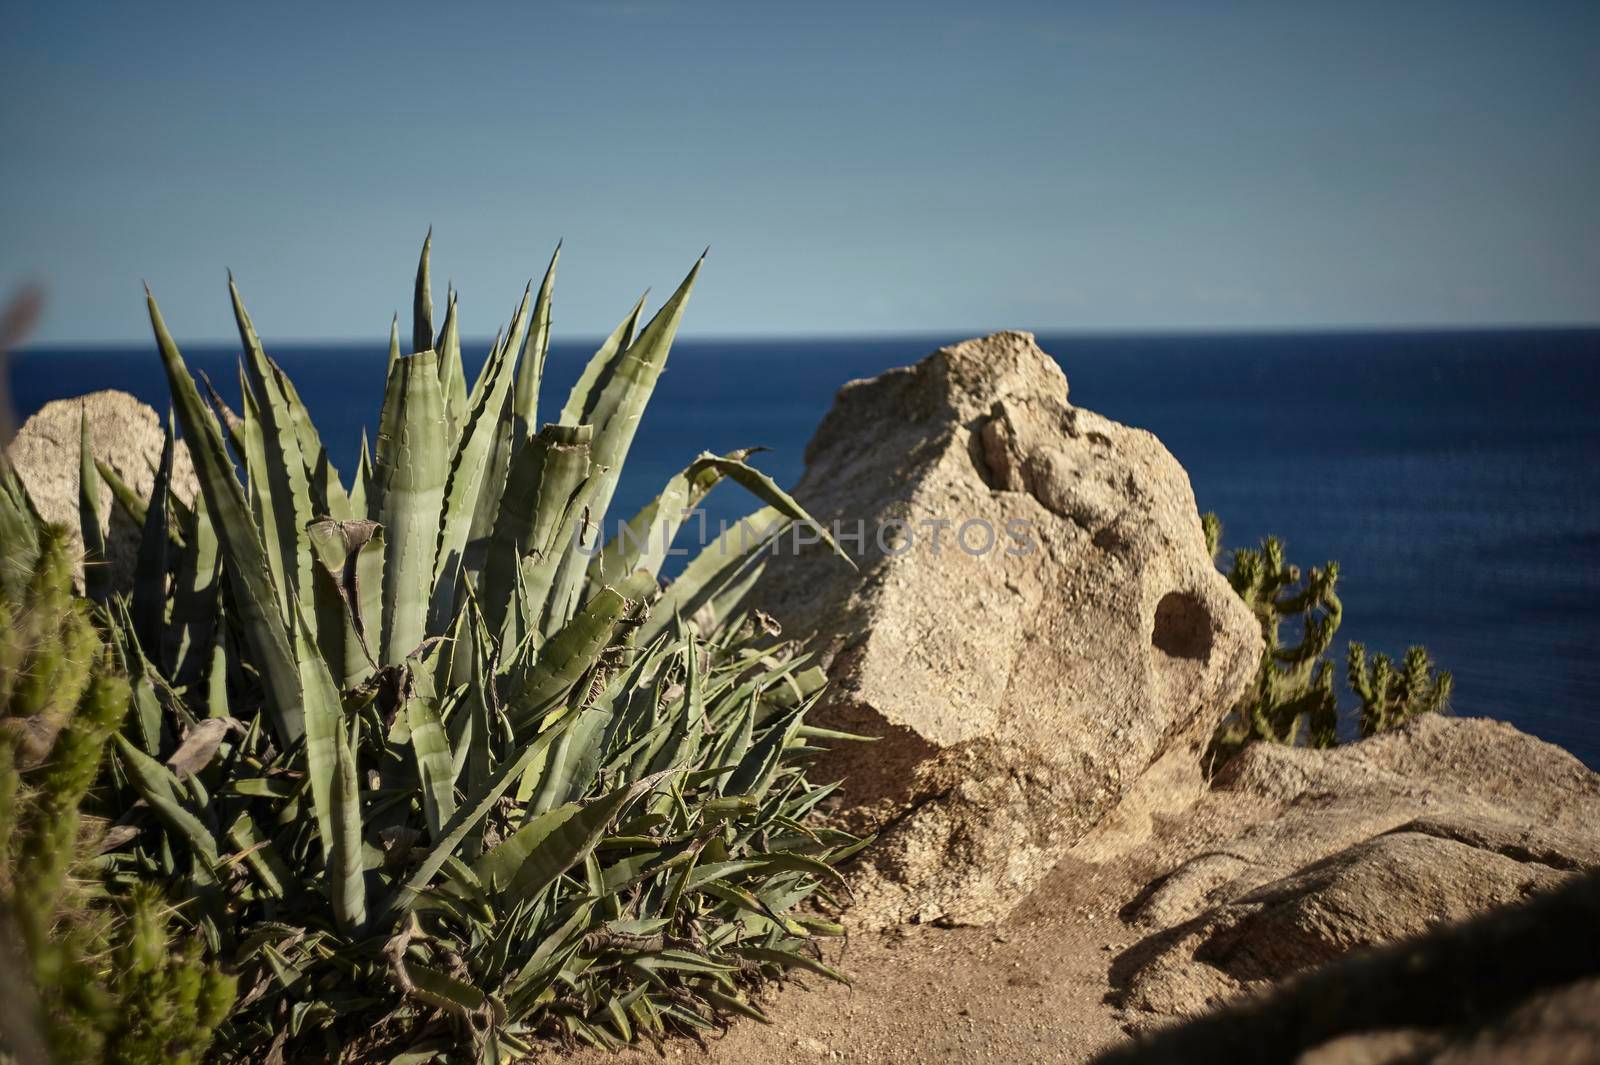 Detail of an aloe vera plant growing near some rocks near the sea.